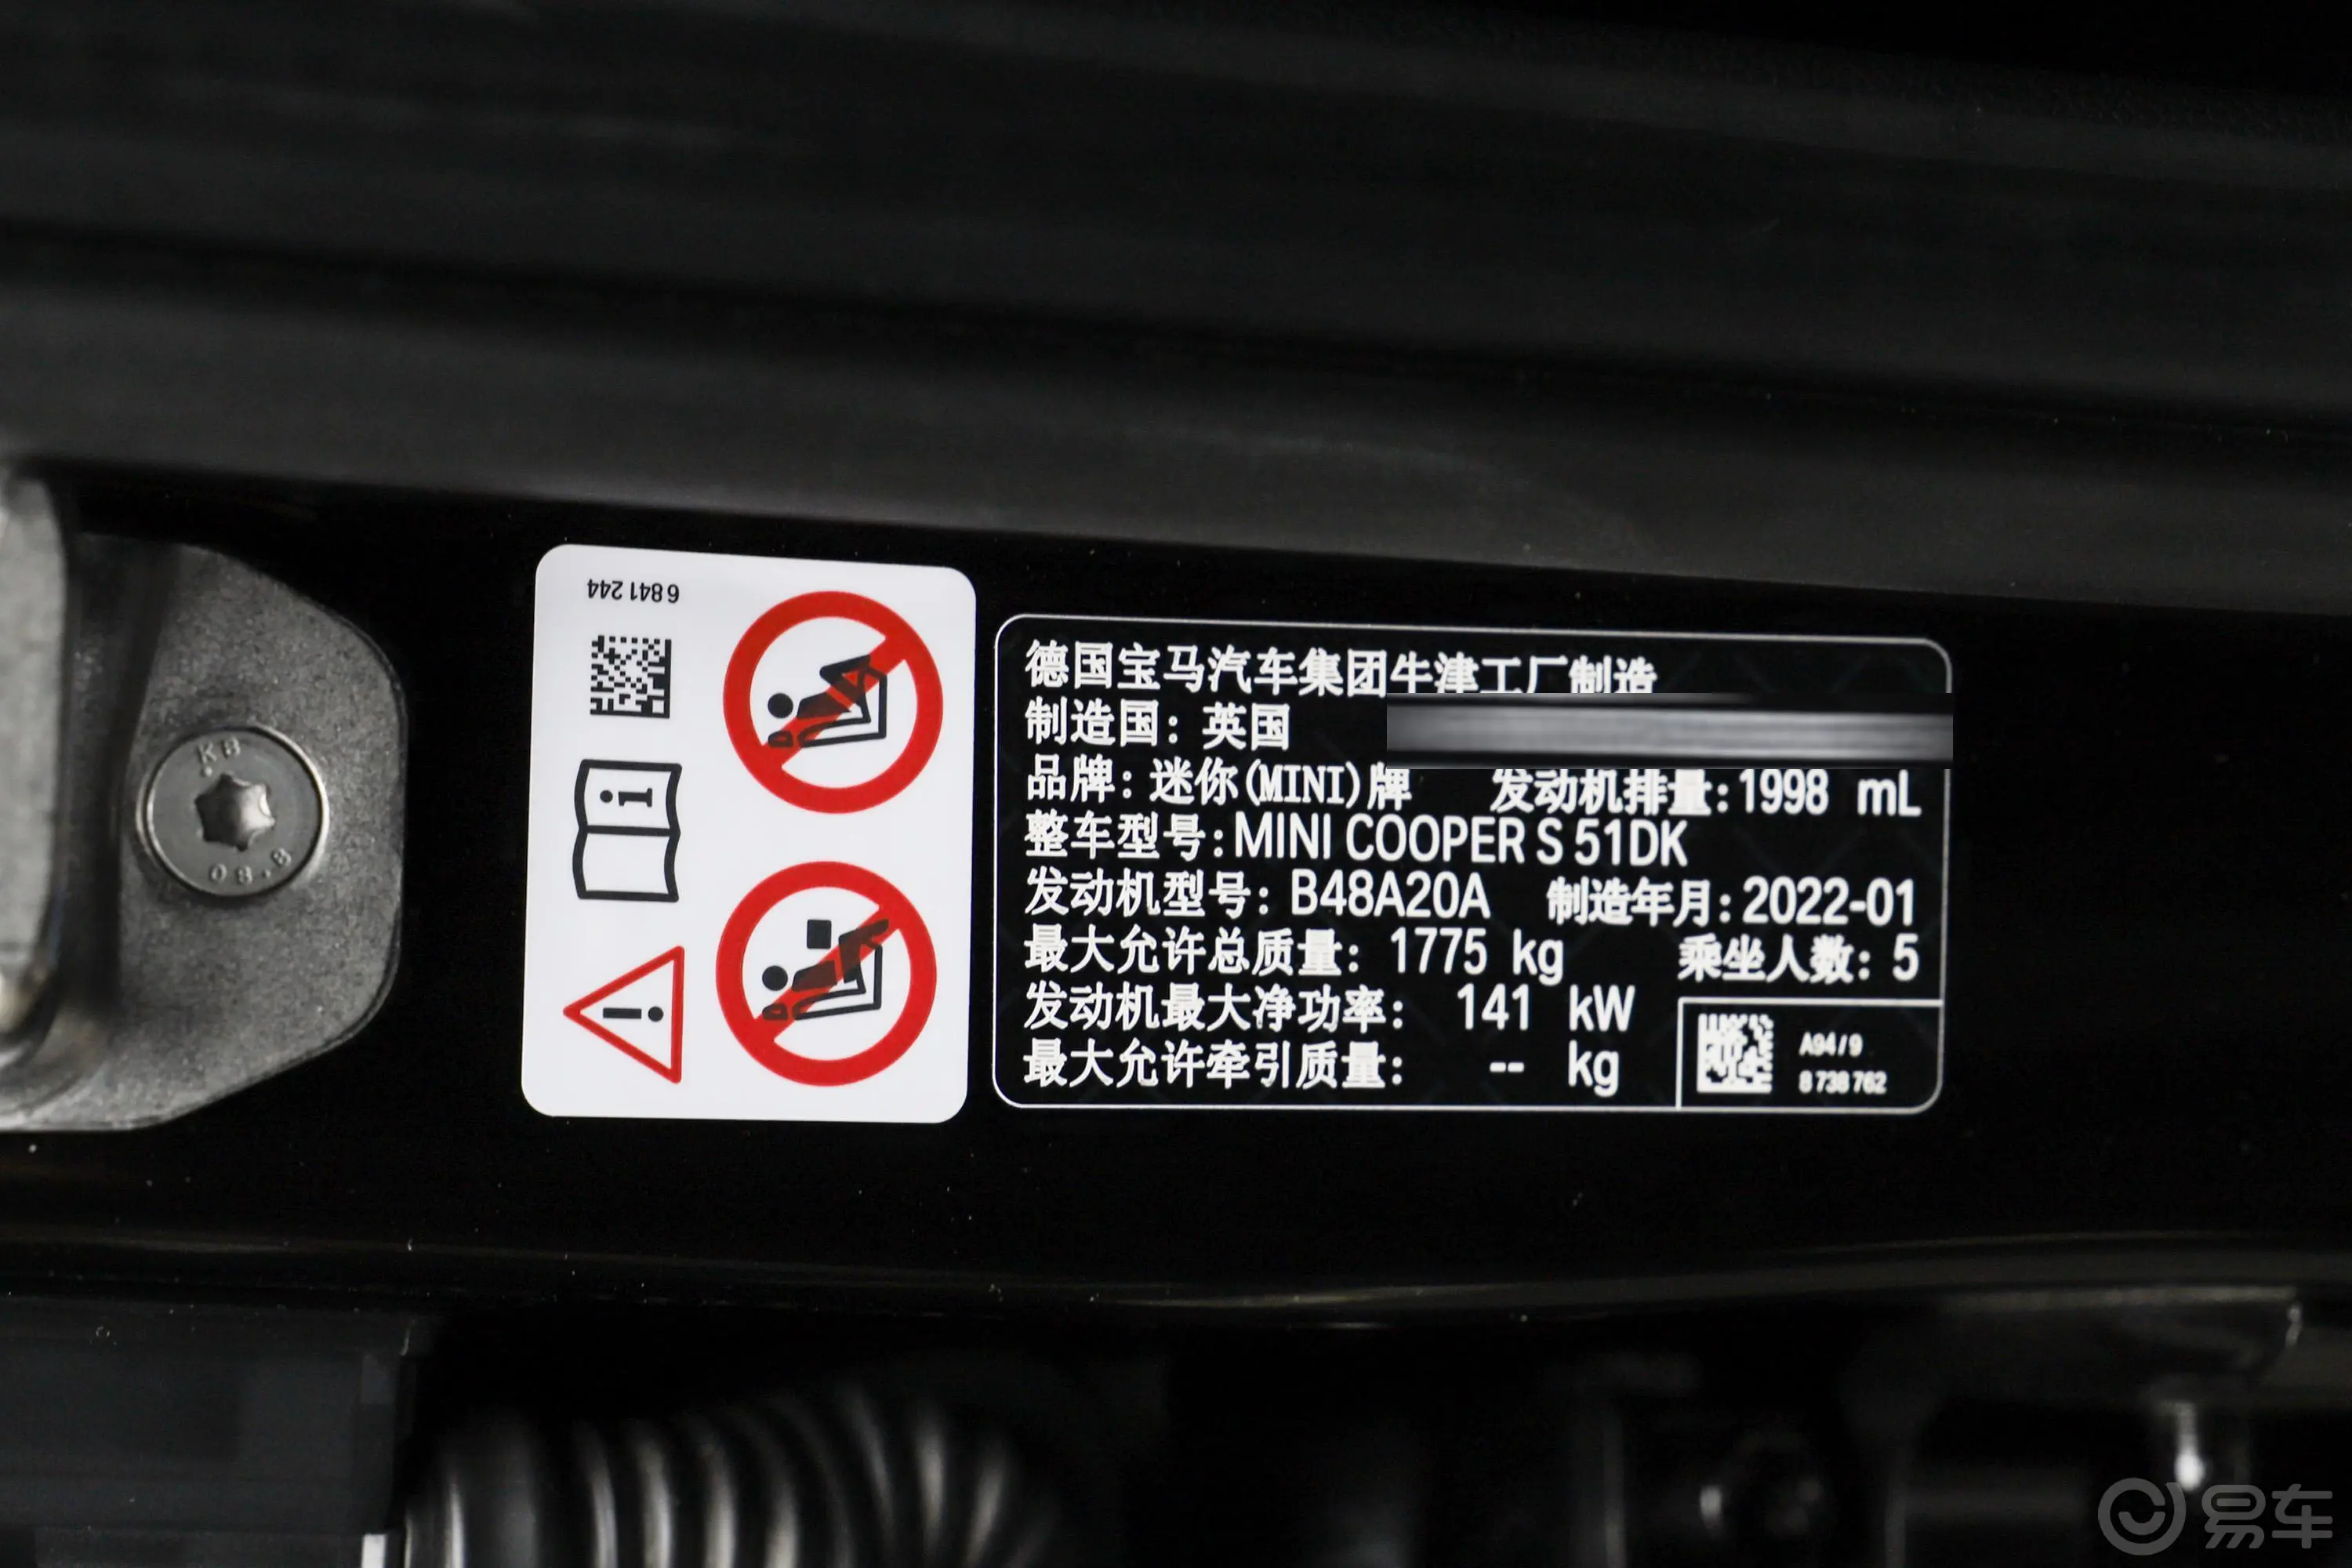 MINI2.0T COOPER S 黑标特别版 五门版车辆信息铭牌